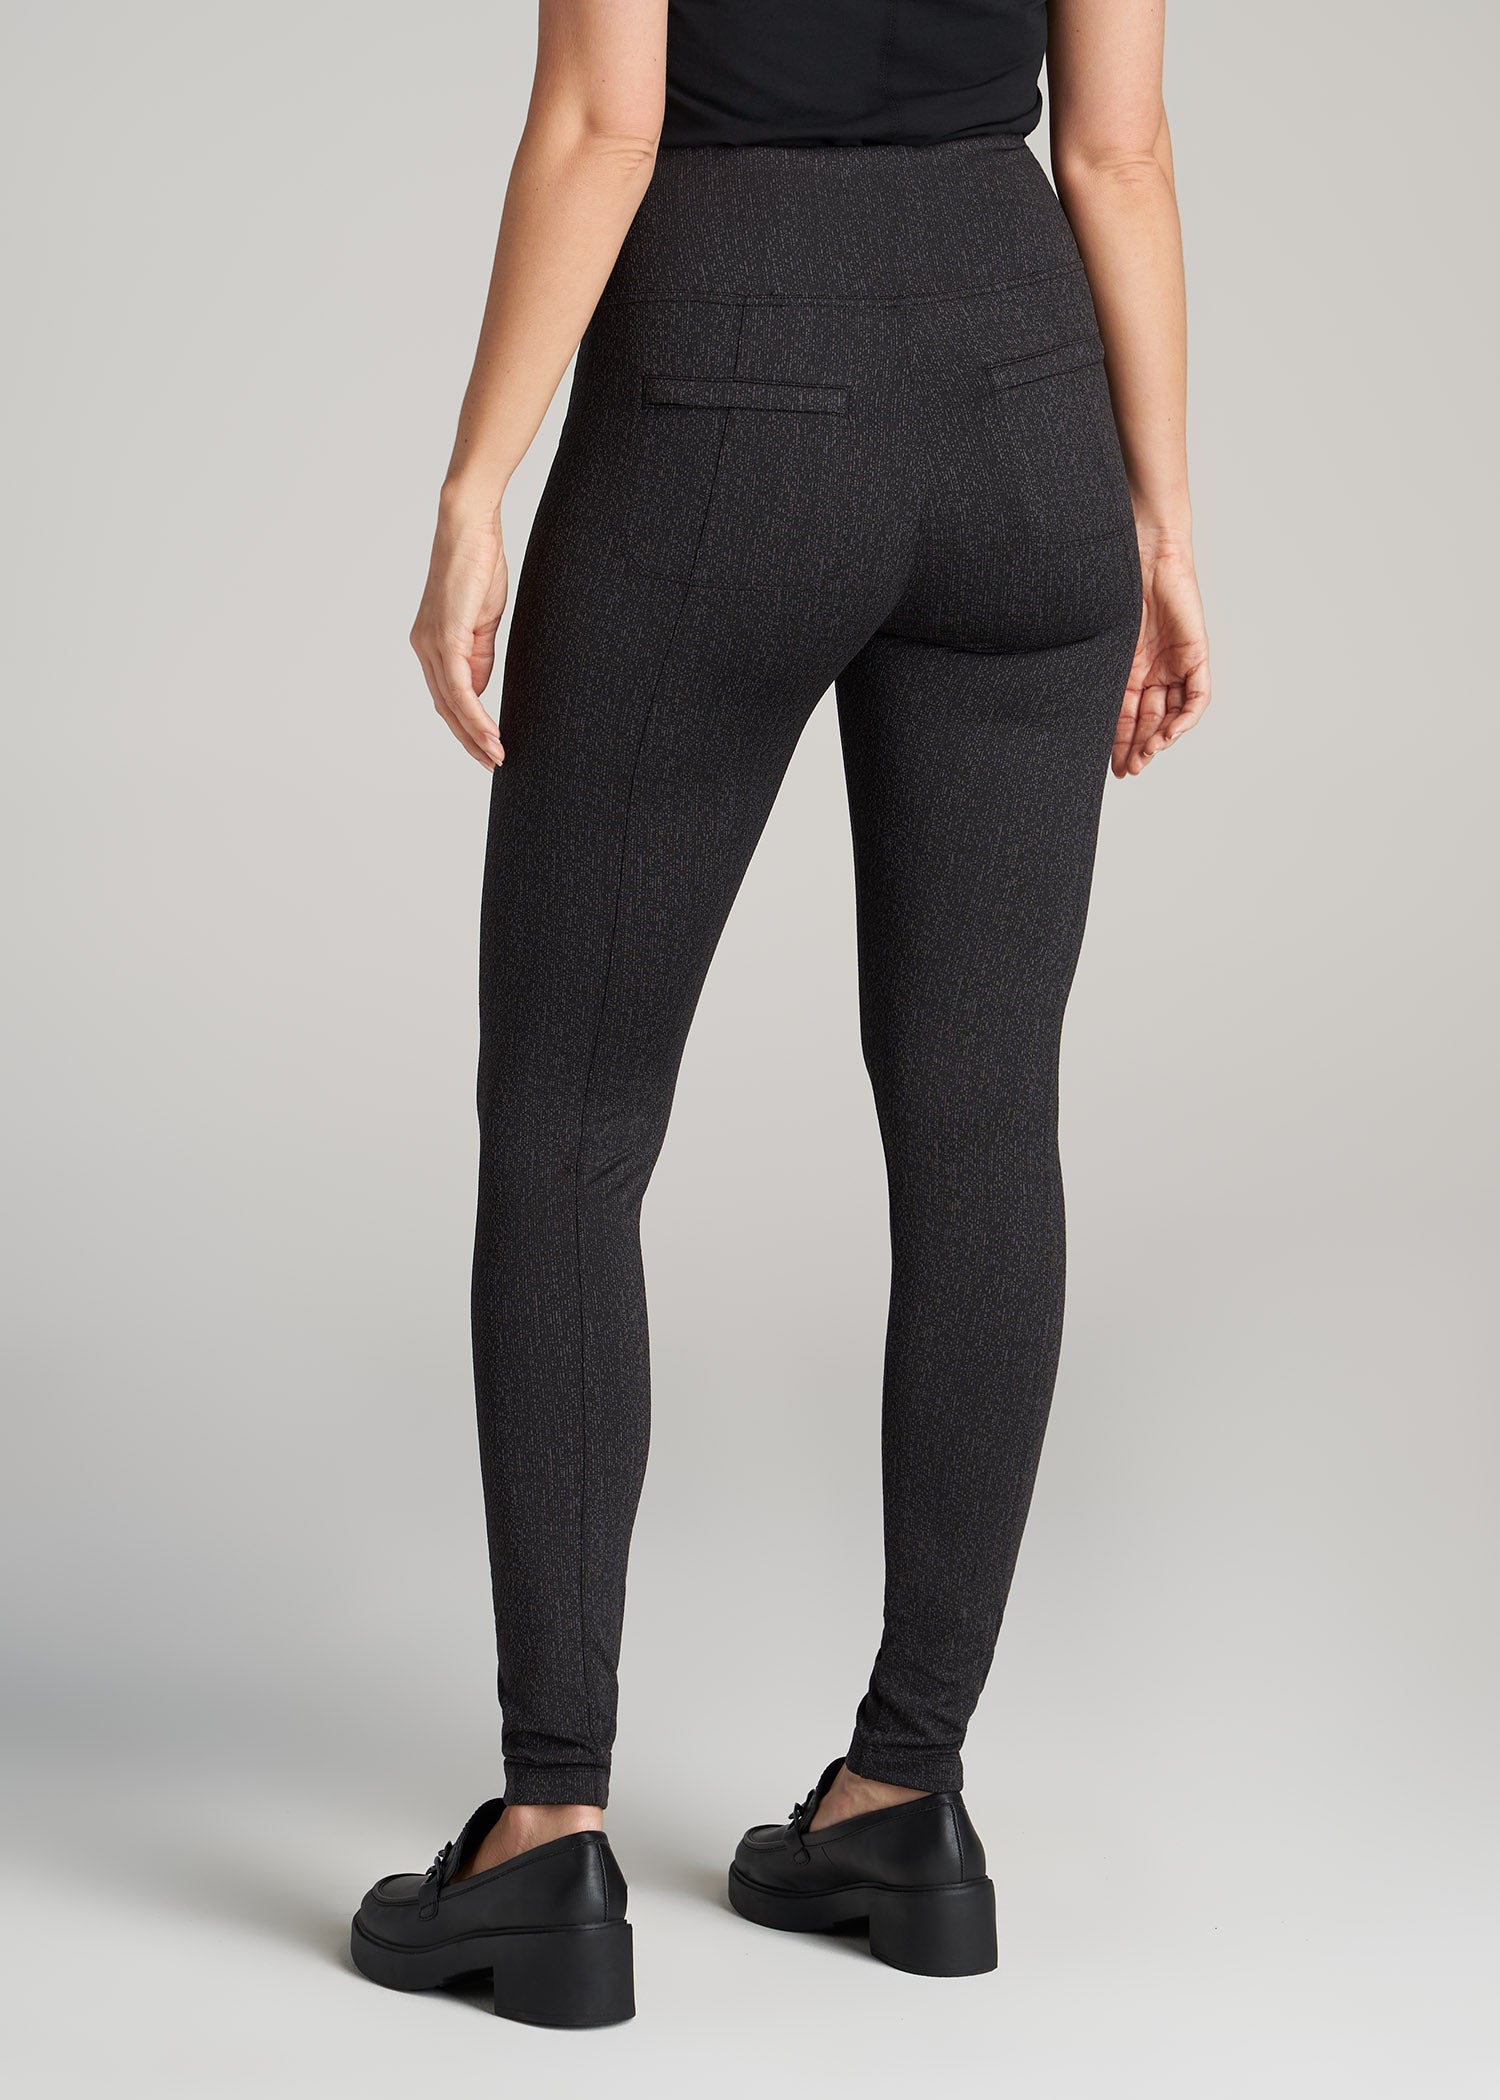       American-Tall-Women-Textured-Back-Pocket-Legging-Black-Charcoal-Jacquard-back